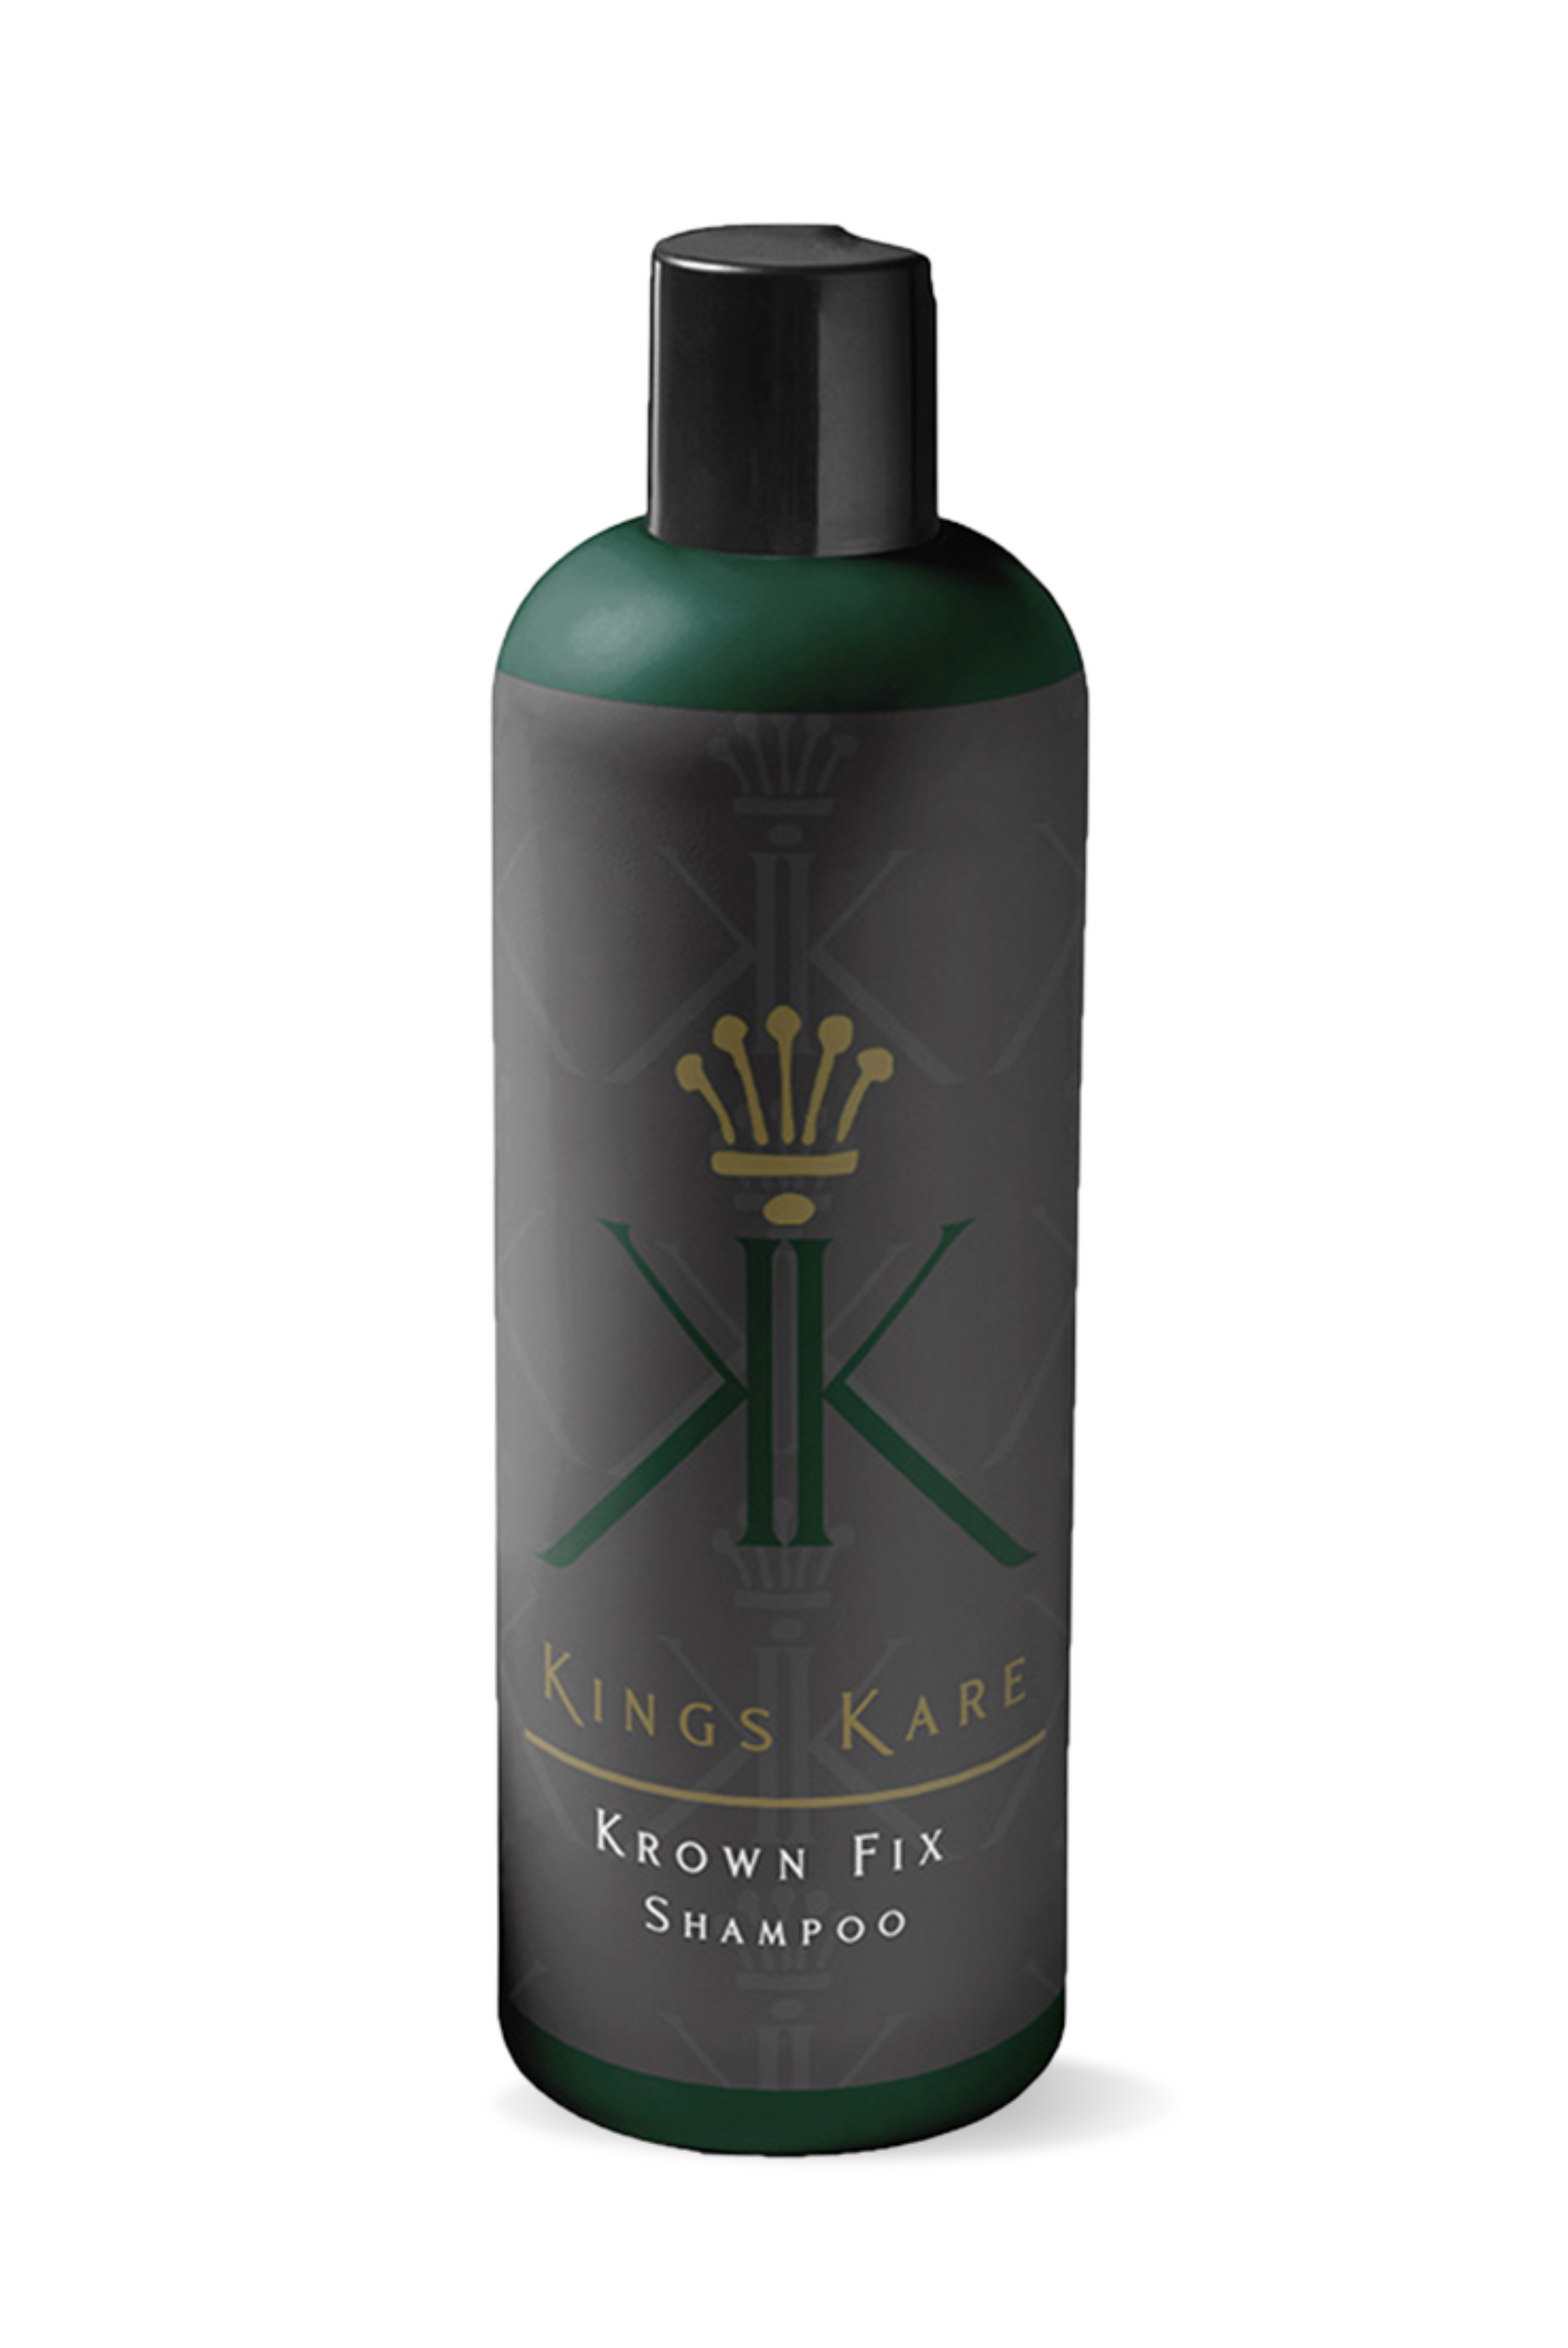 Krown Fix Shampoo - Kings Kare shampoo for black men Shampoo for black people  Shampoo for black hair  Shampoo for black male hair  Black textured hair  Black men’s hair care